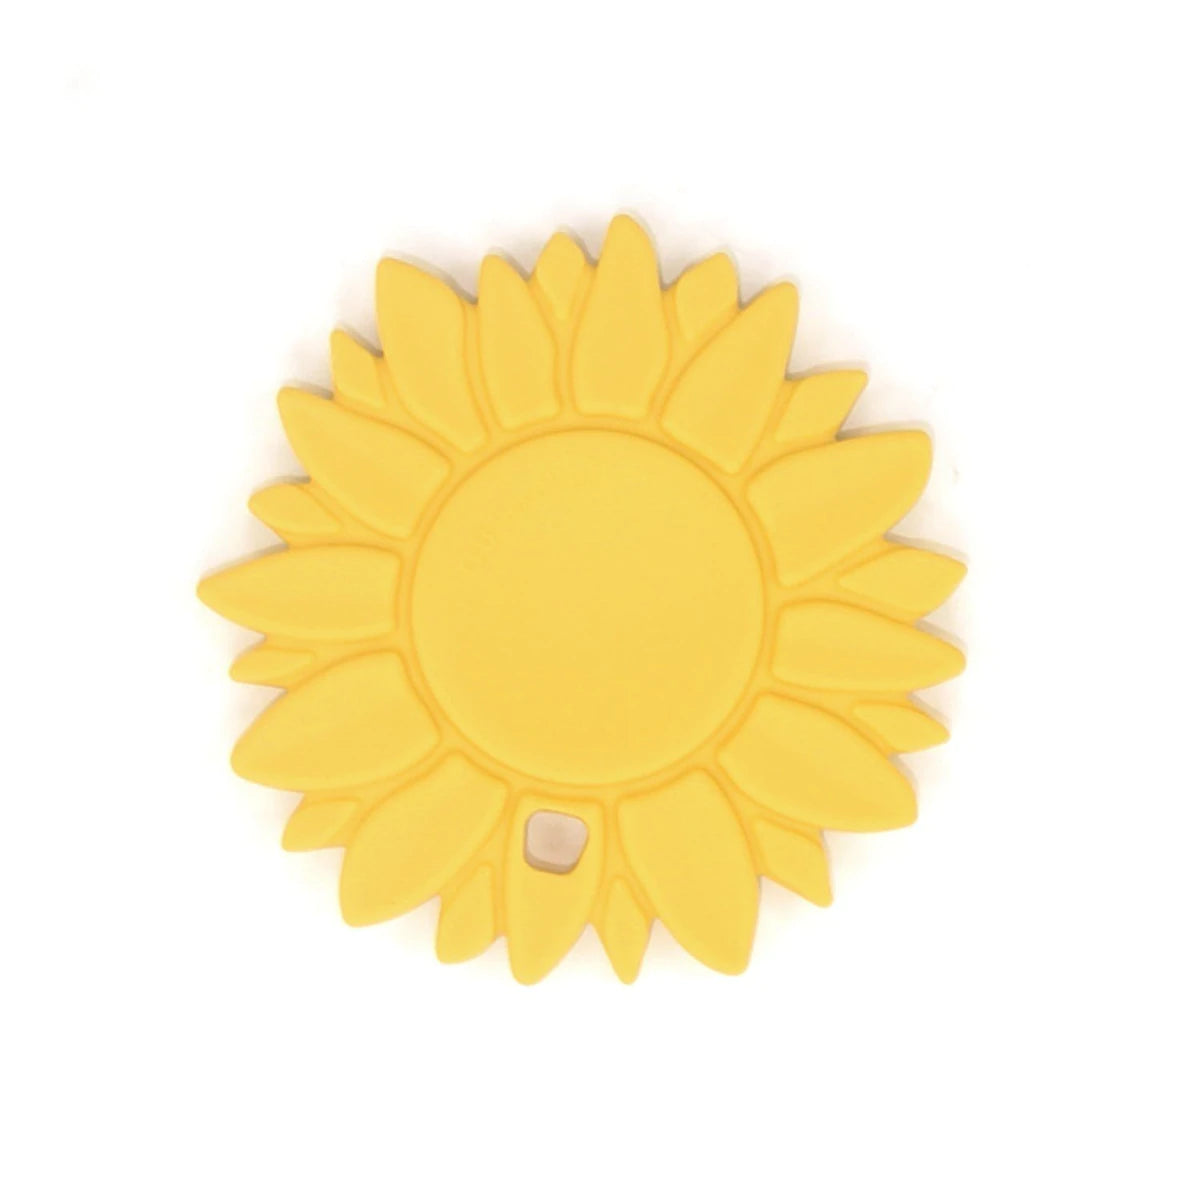 O.B Design | Silicone Teether - Lemon Sunflower